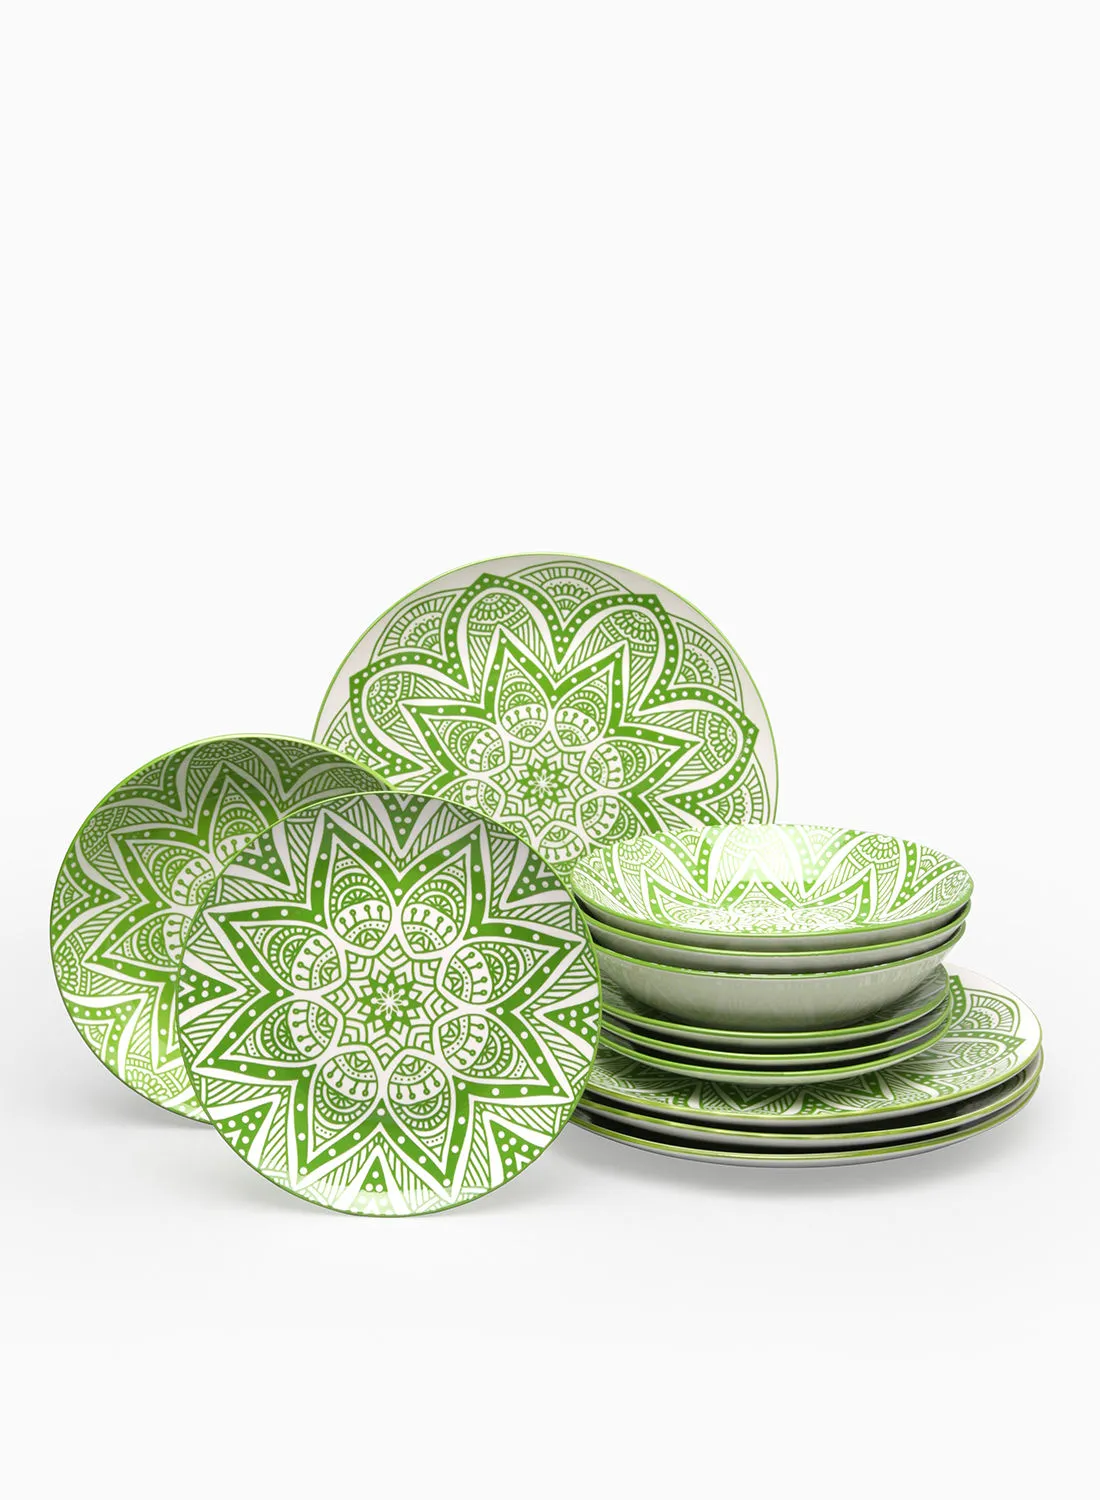 noon east 12 Piece Porcelain Dinner Set - Dishes, Plates - Dinner Plate, Side Plate, Soup Plate - Serves 4 - Printed Design Jade